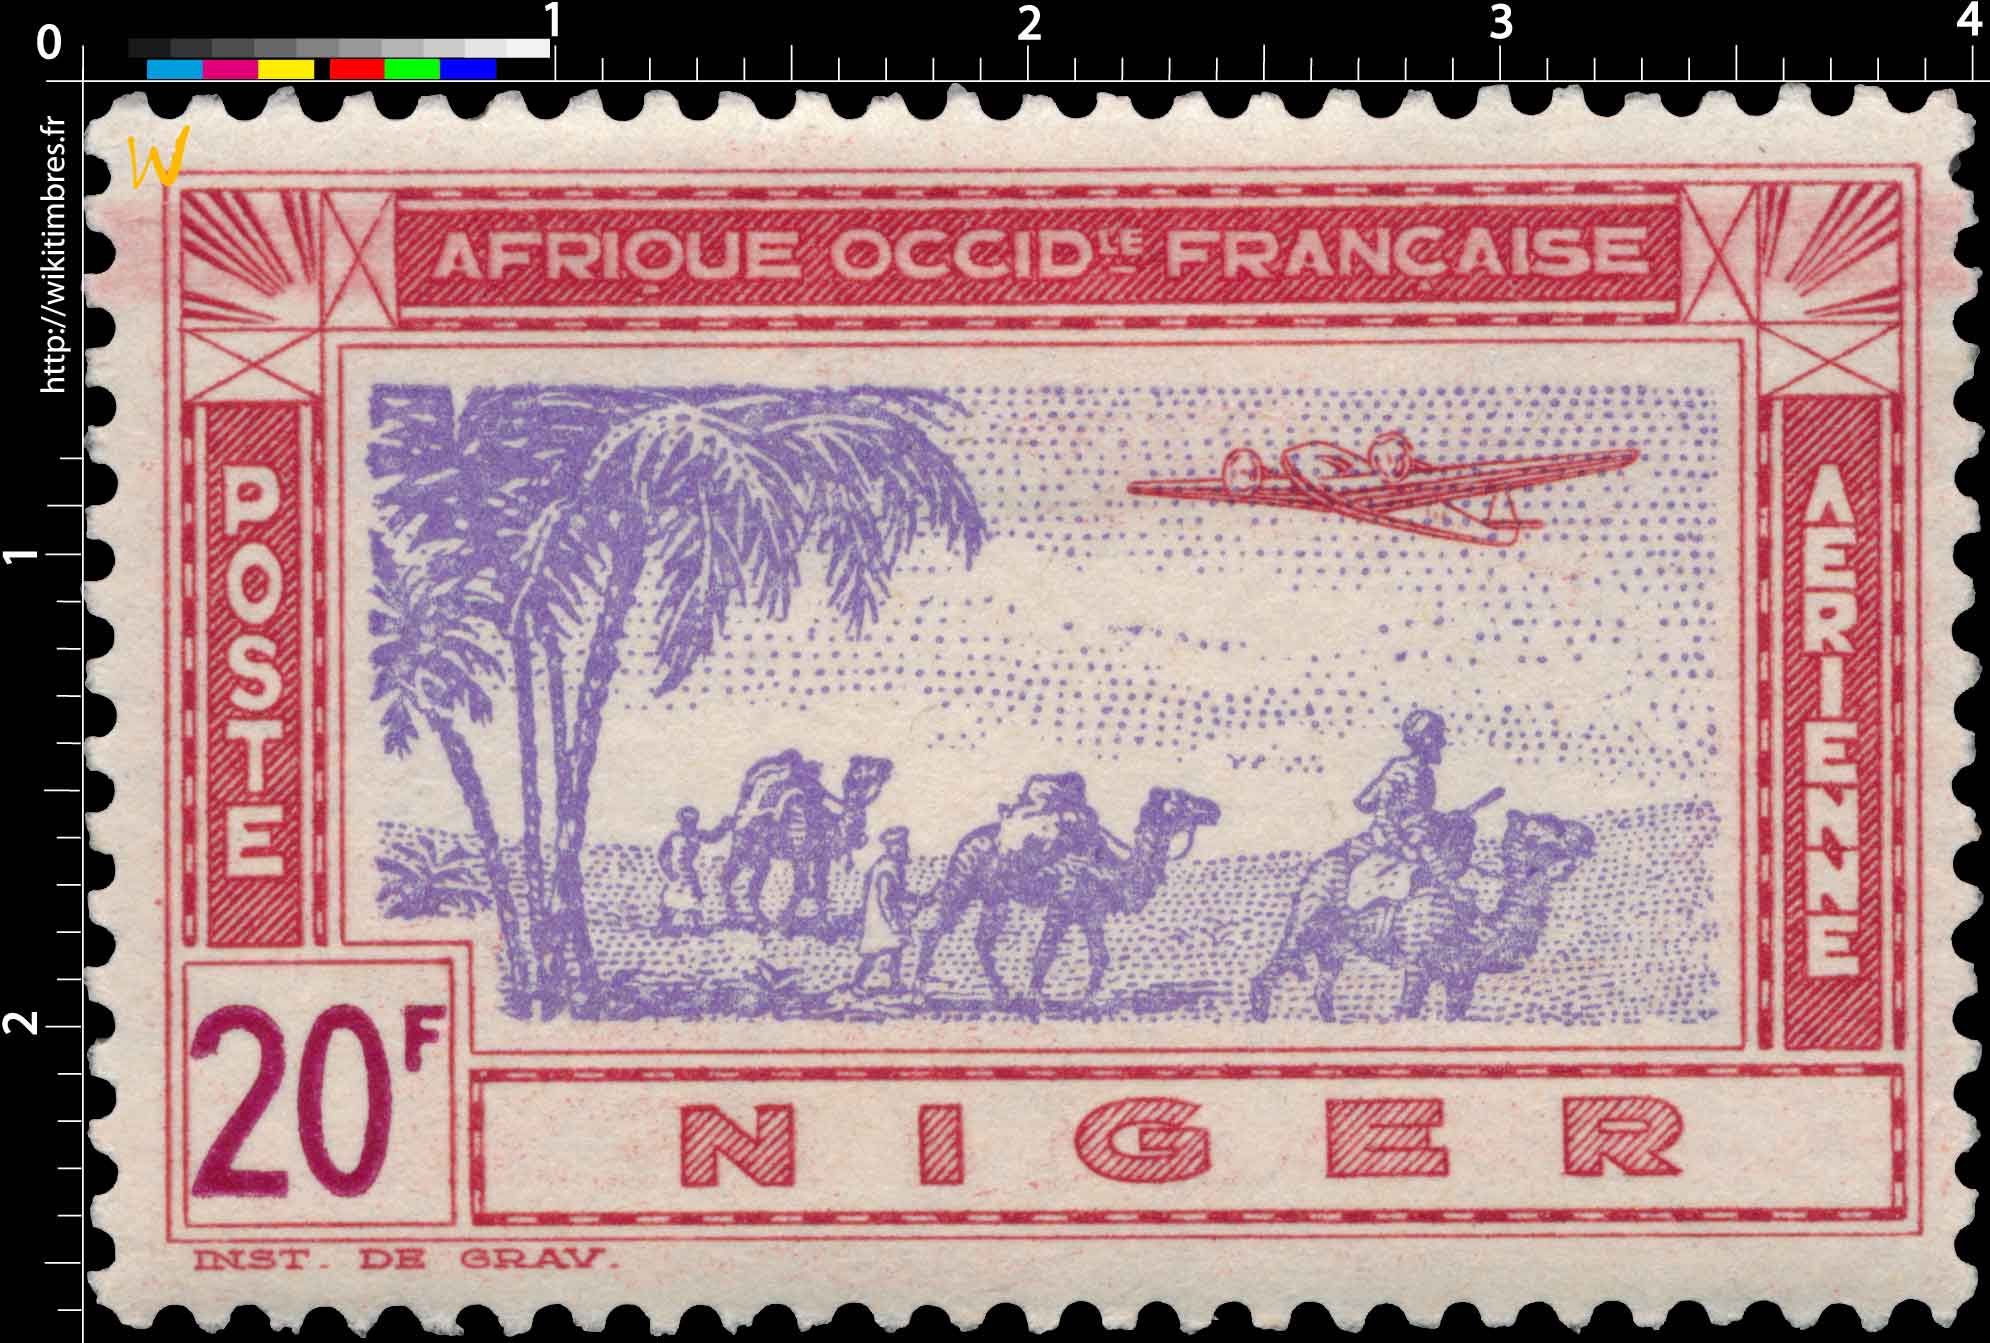 Niger - Avion et caravane